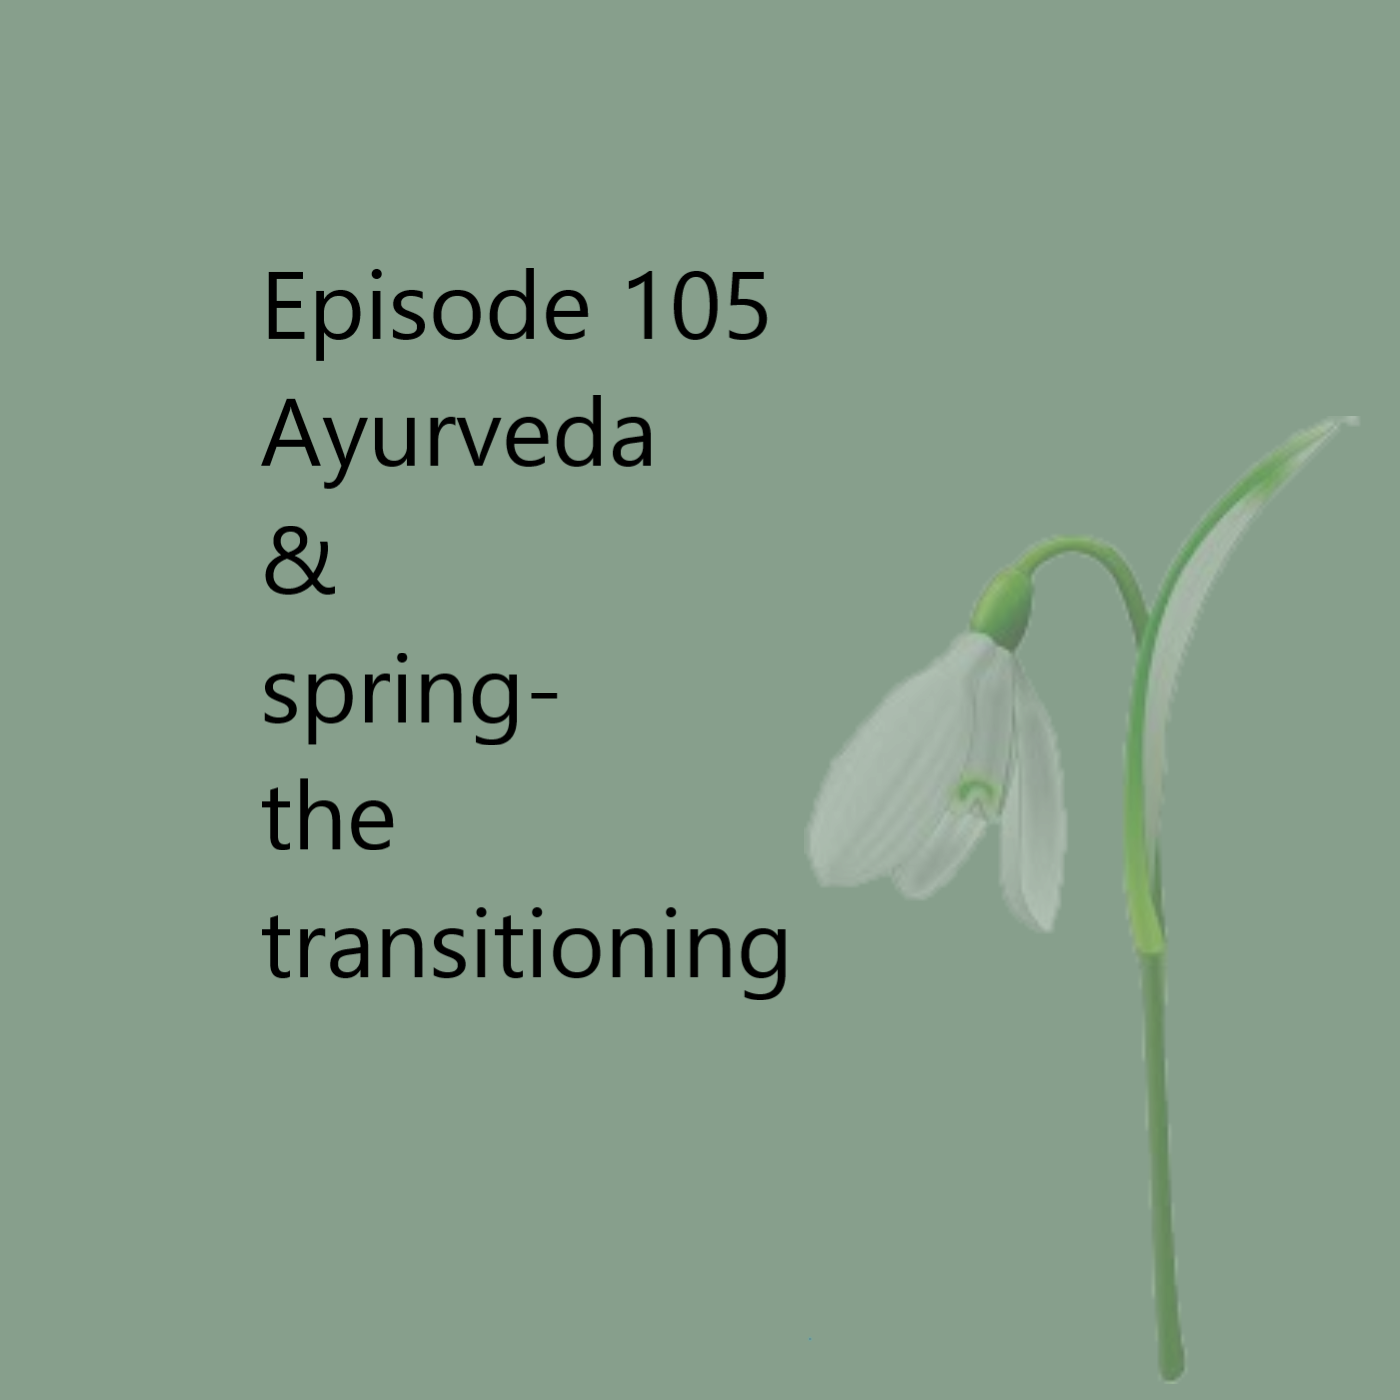 Episode 105 Ayurvedic Life - From Winter to Spring